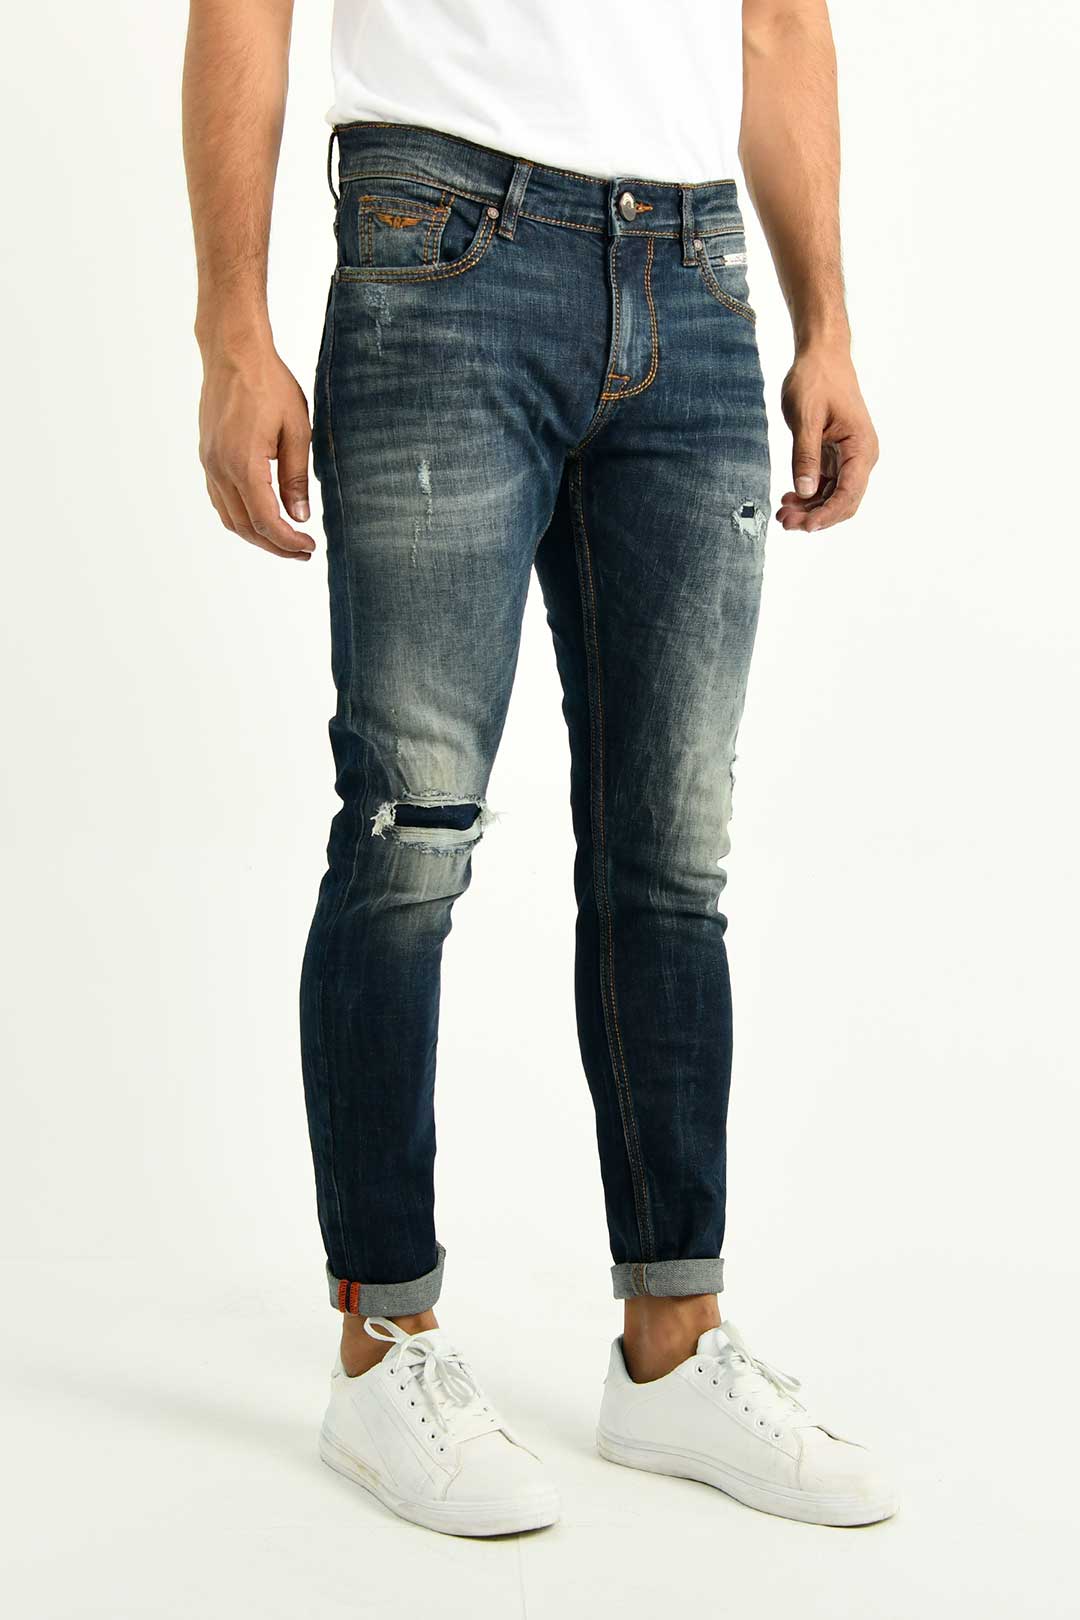 Men’s Denim Jeans-RJ3902